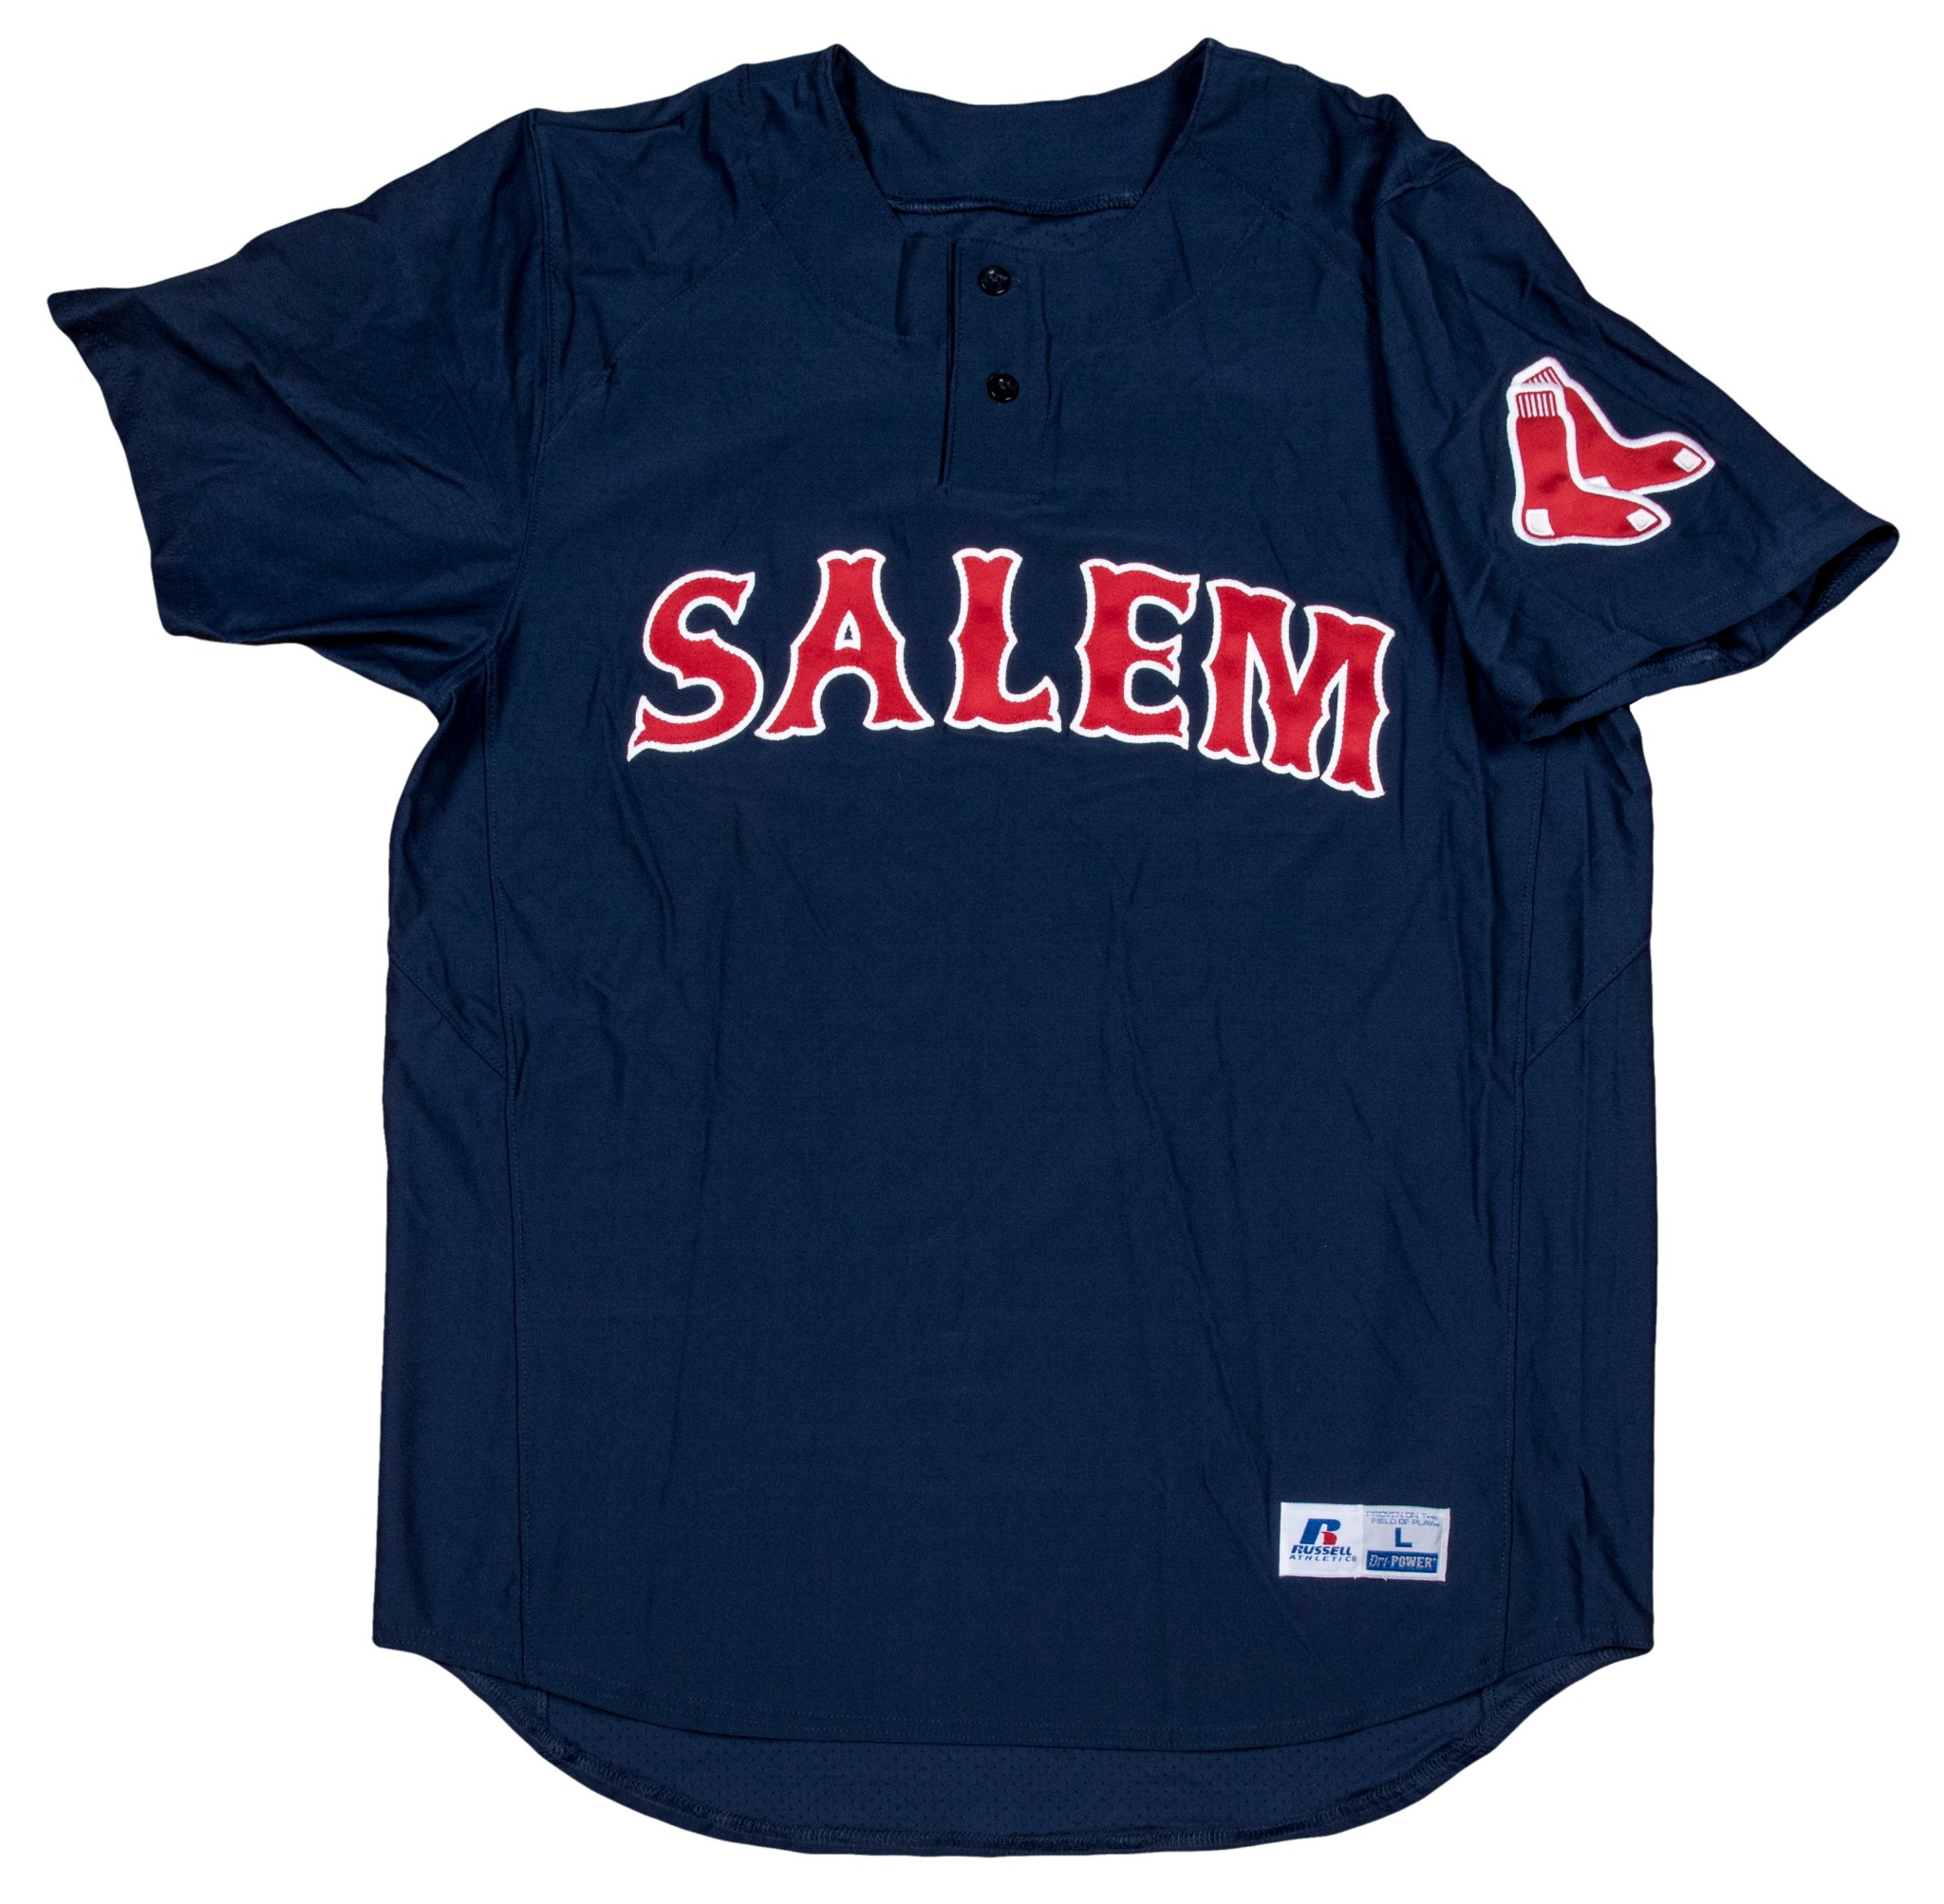 Salem Red Sox unveil new 2015 jerseys